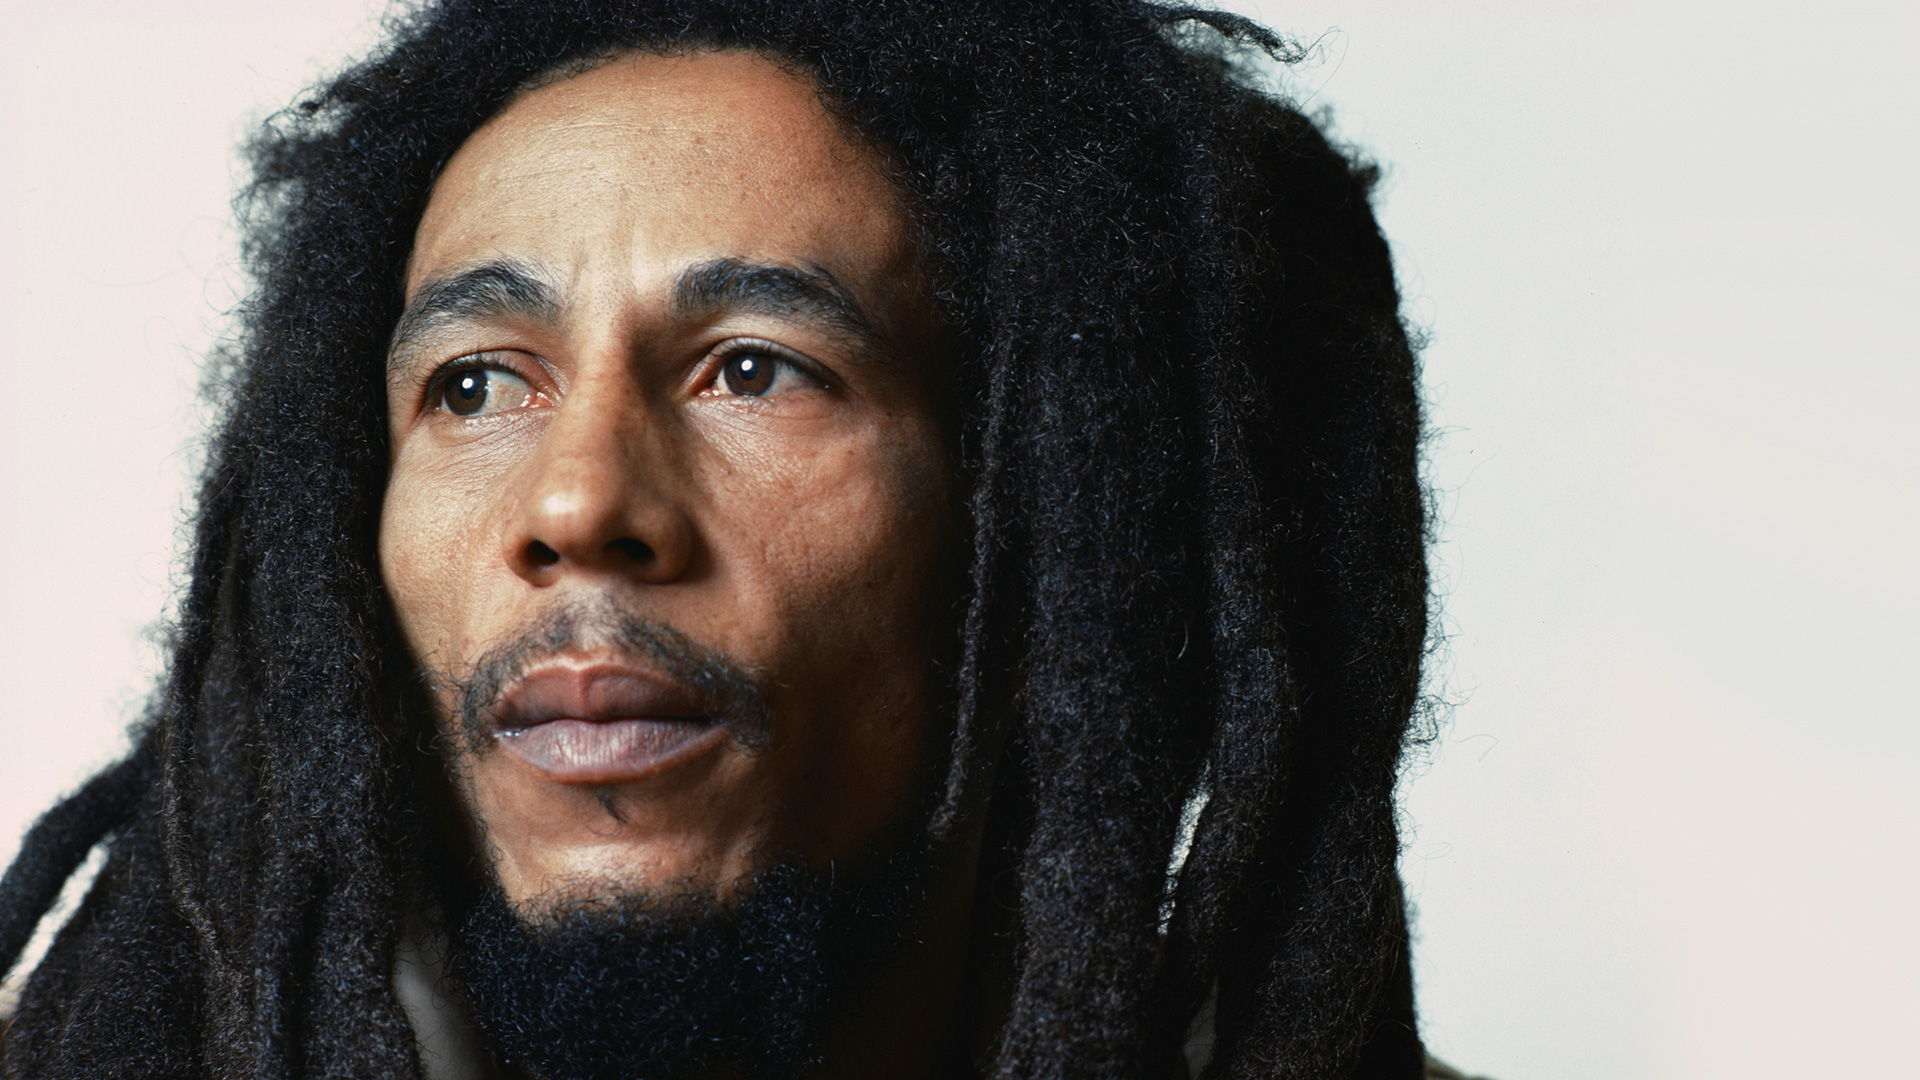 Music Bob Marley HD Wallpaper